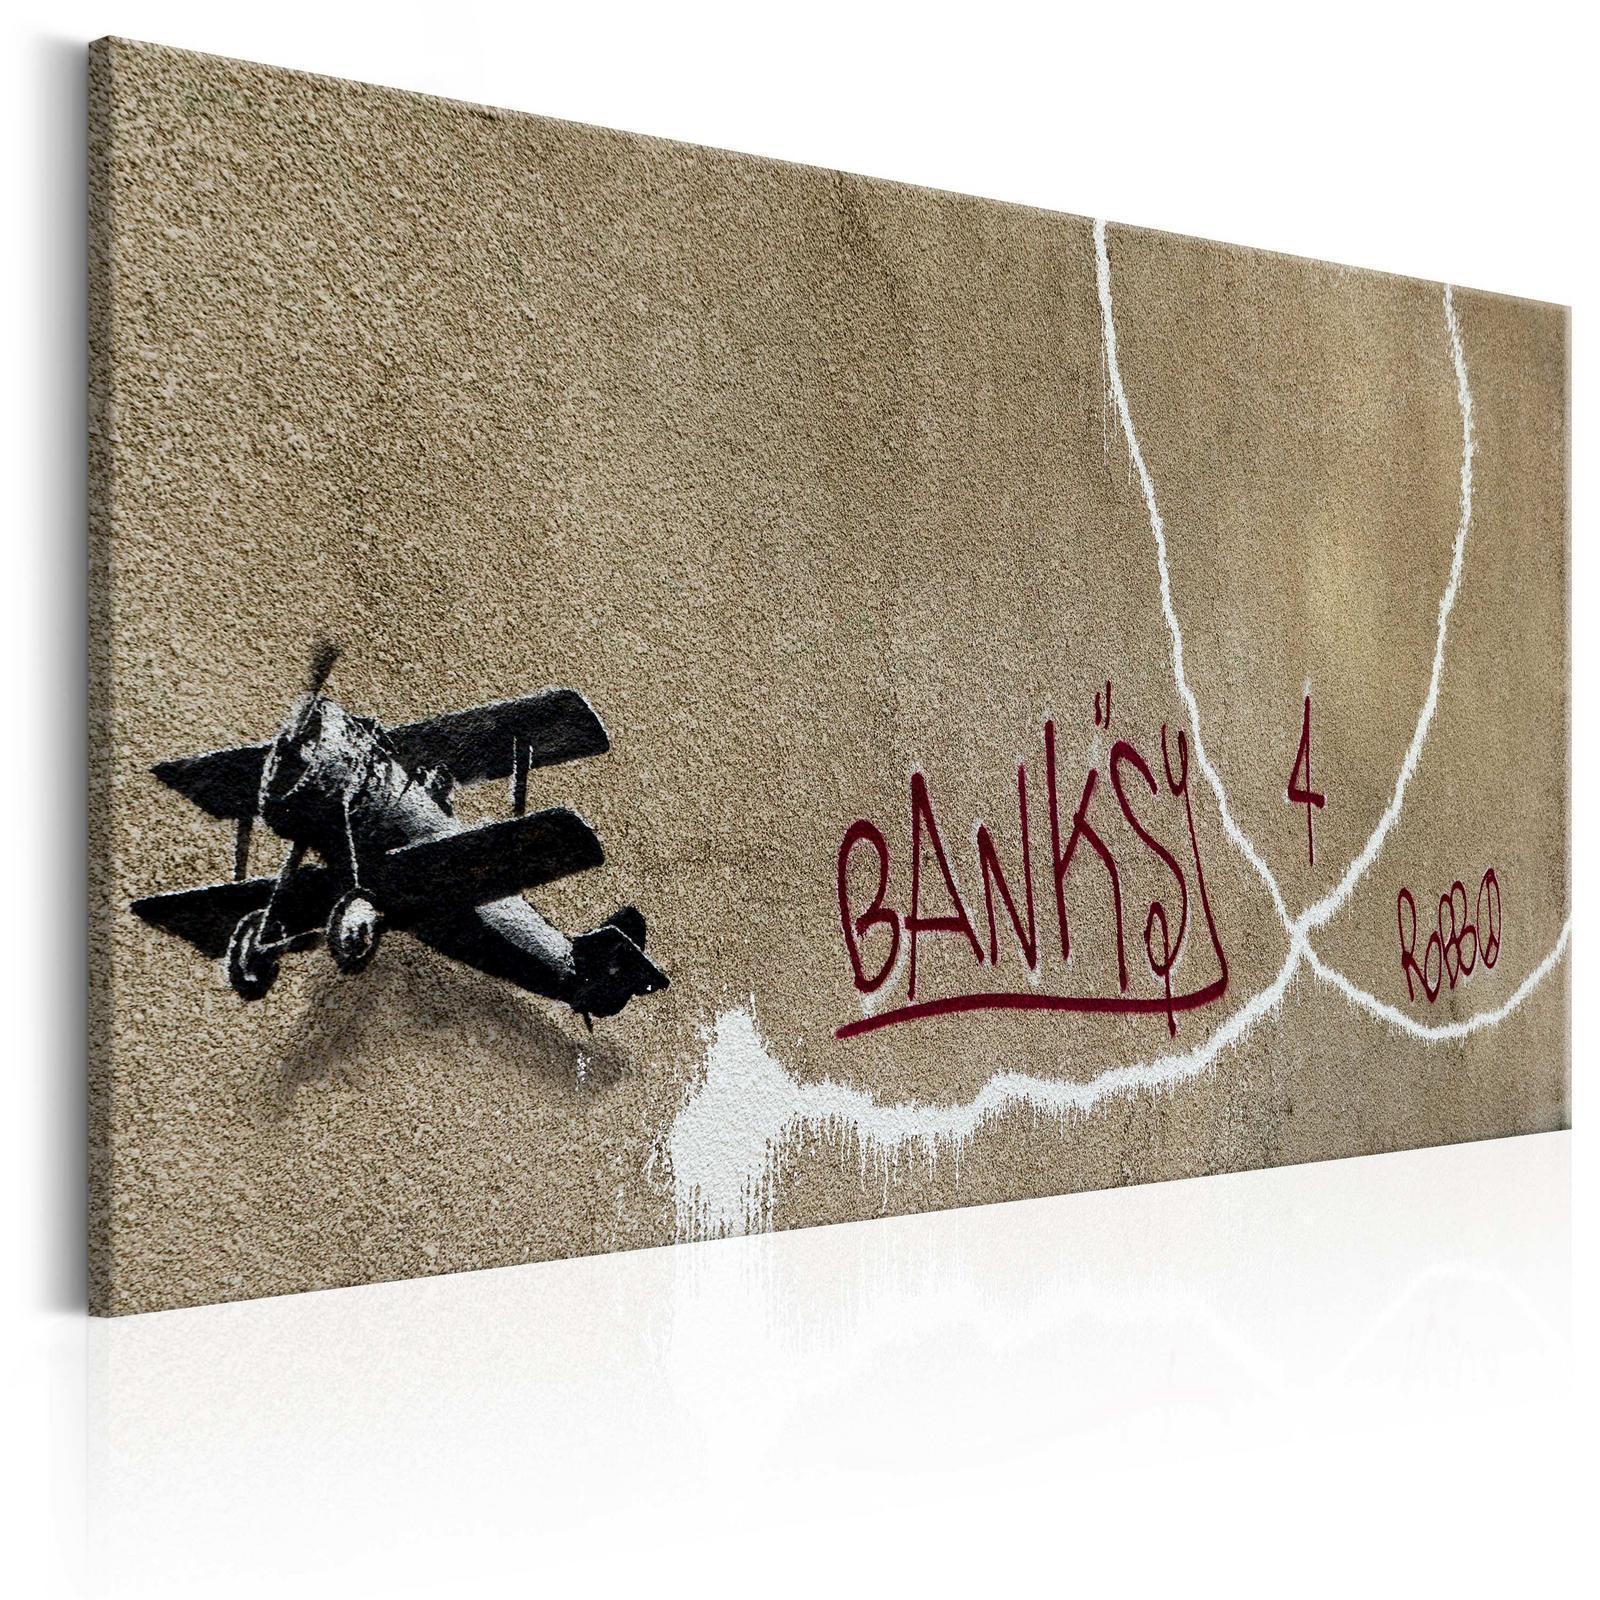 Tableau - Love Plane by Banksy